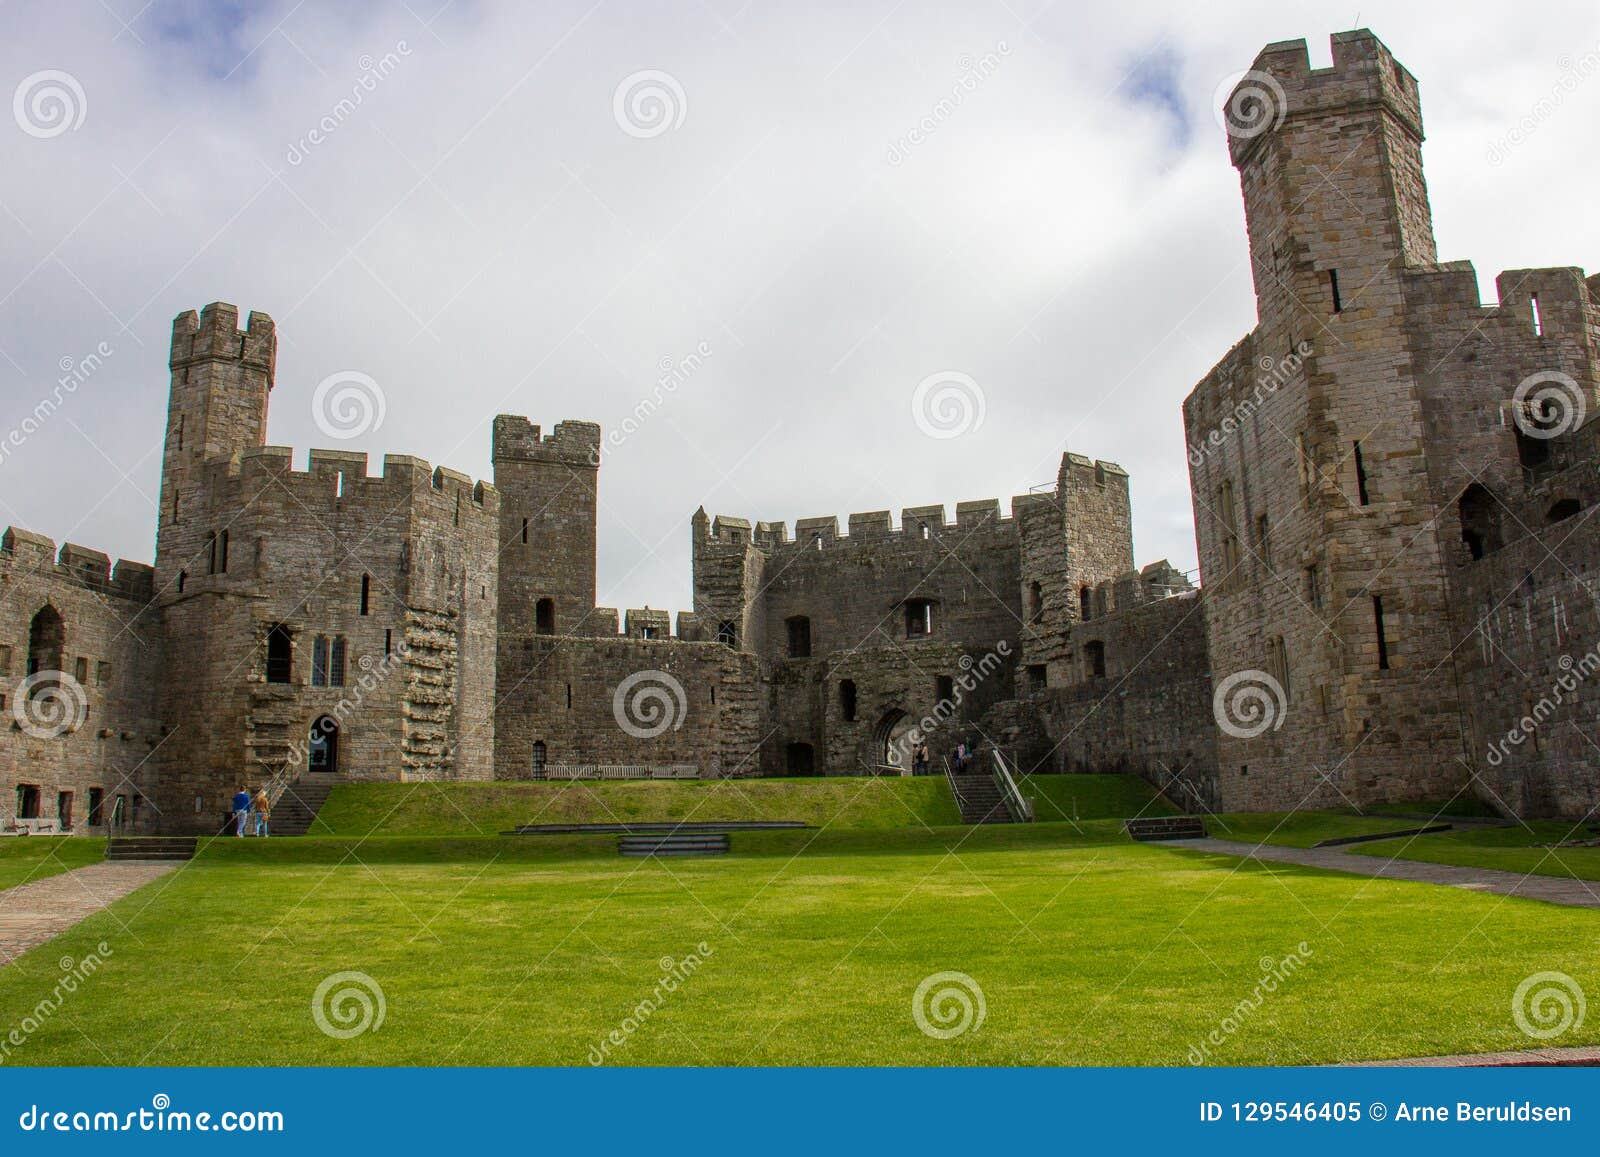 The Interior Of Caernarfon Castle Editorial Image Image Of